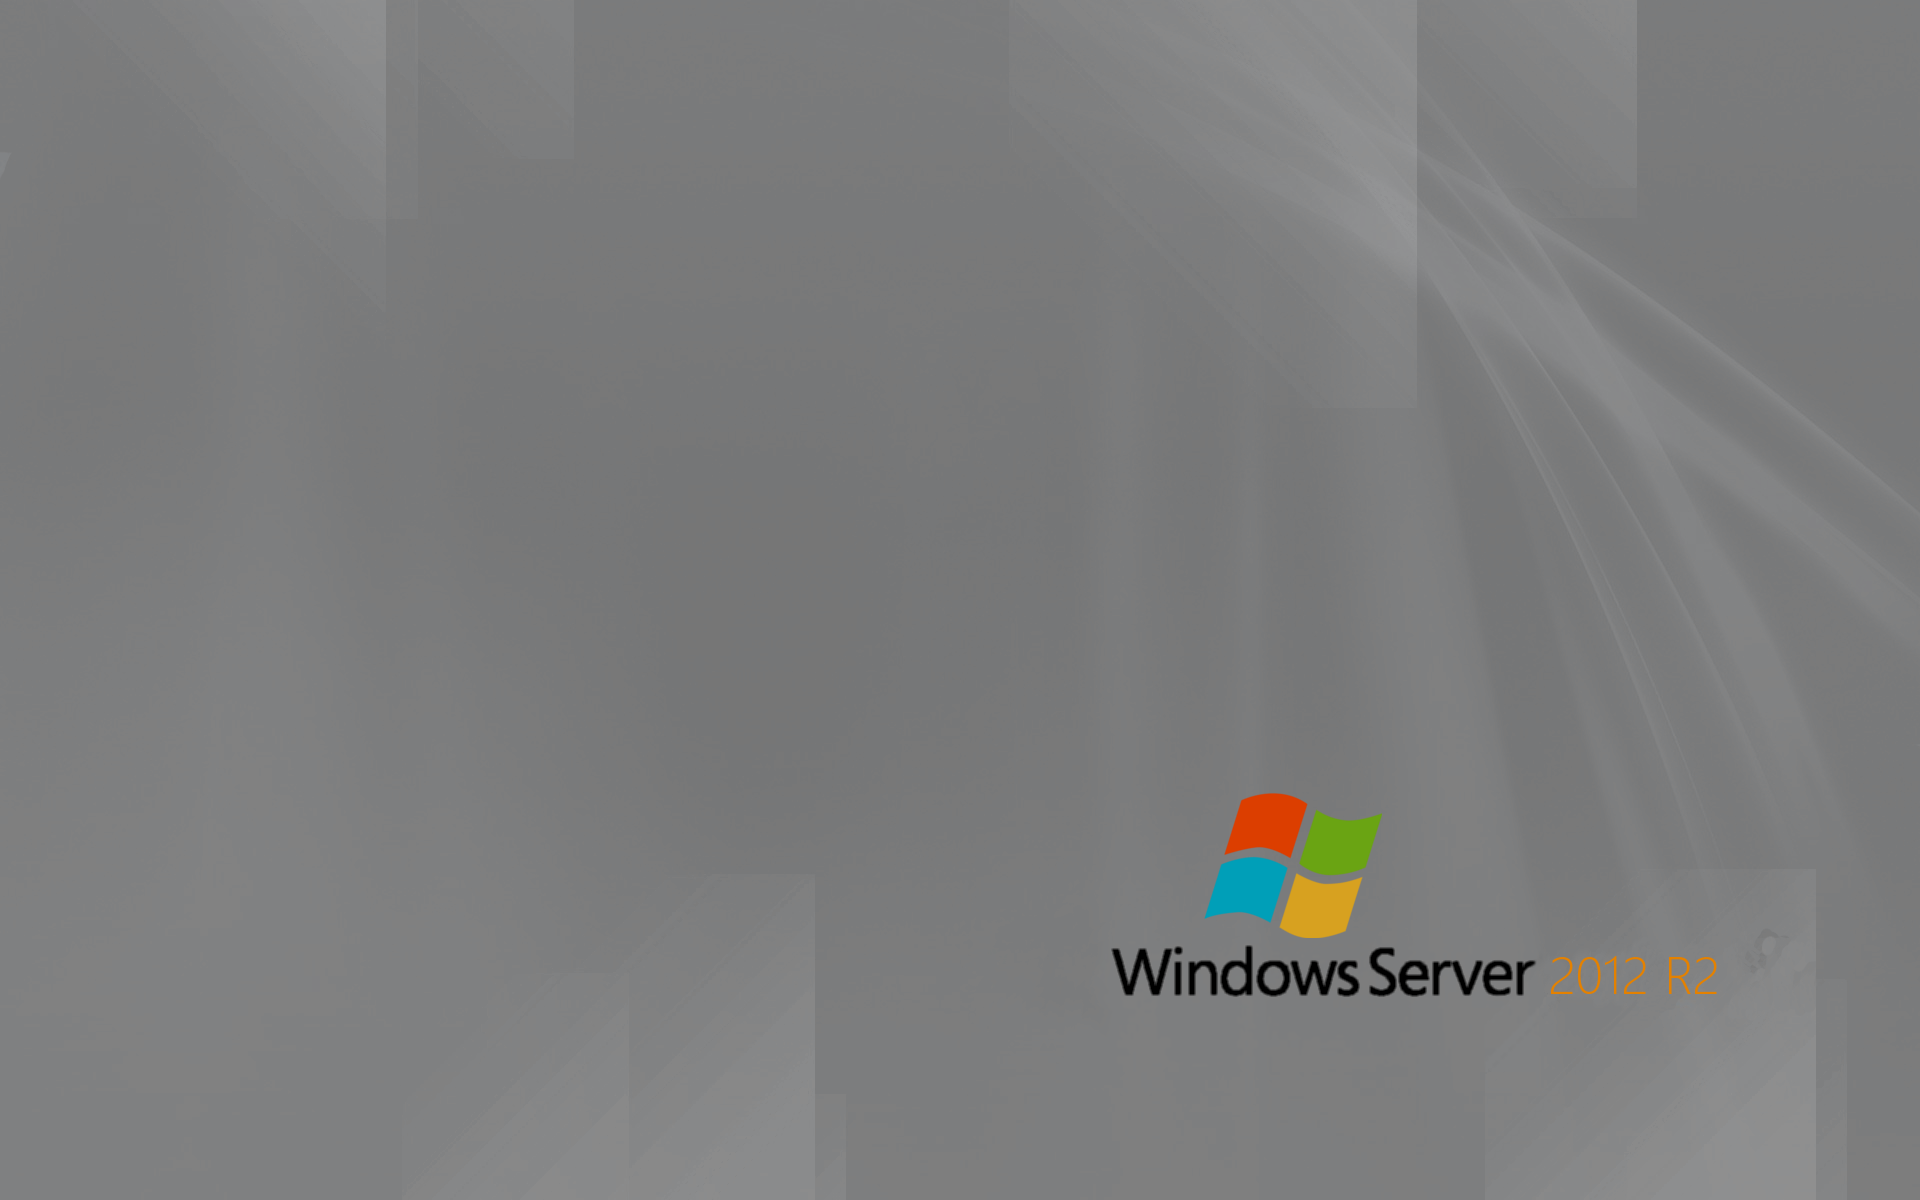 Windows Server 2012 R2 Wallpaper (1920x1200)